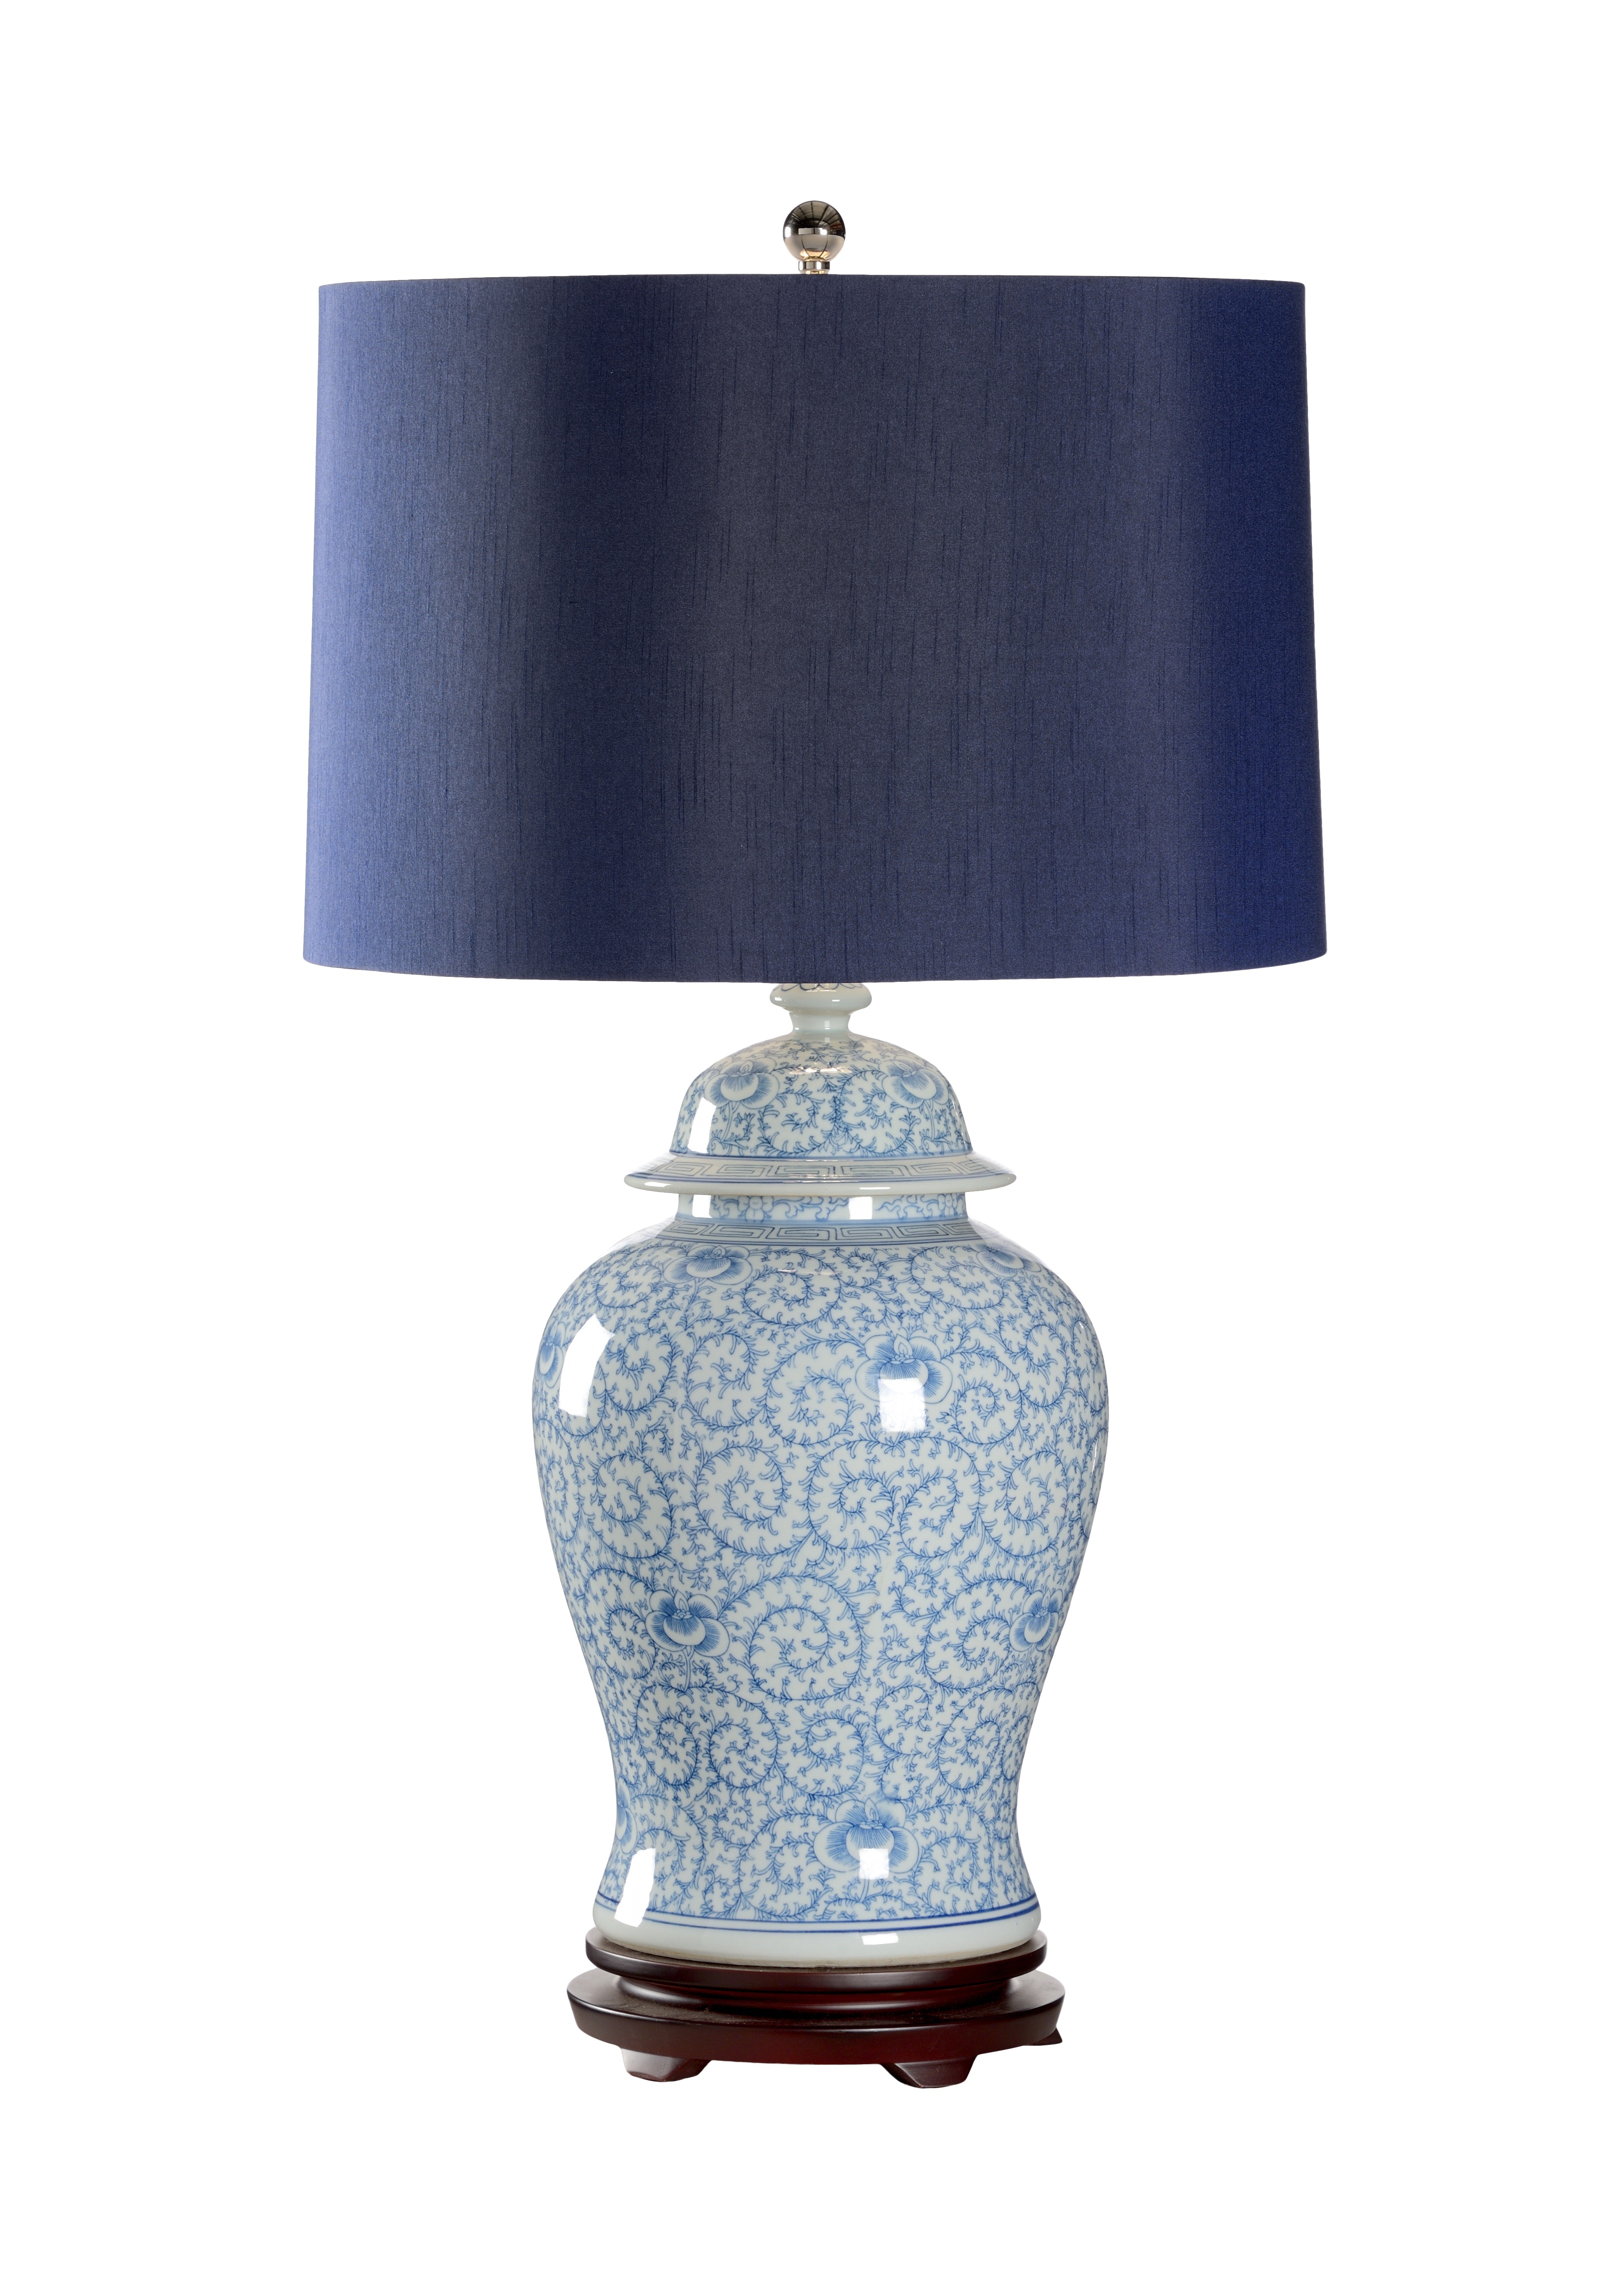 New design ceramic table lamp for wedding decoration